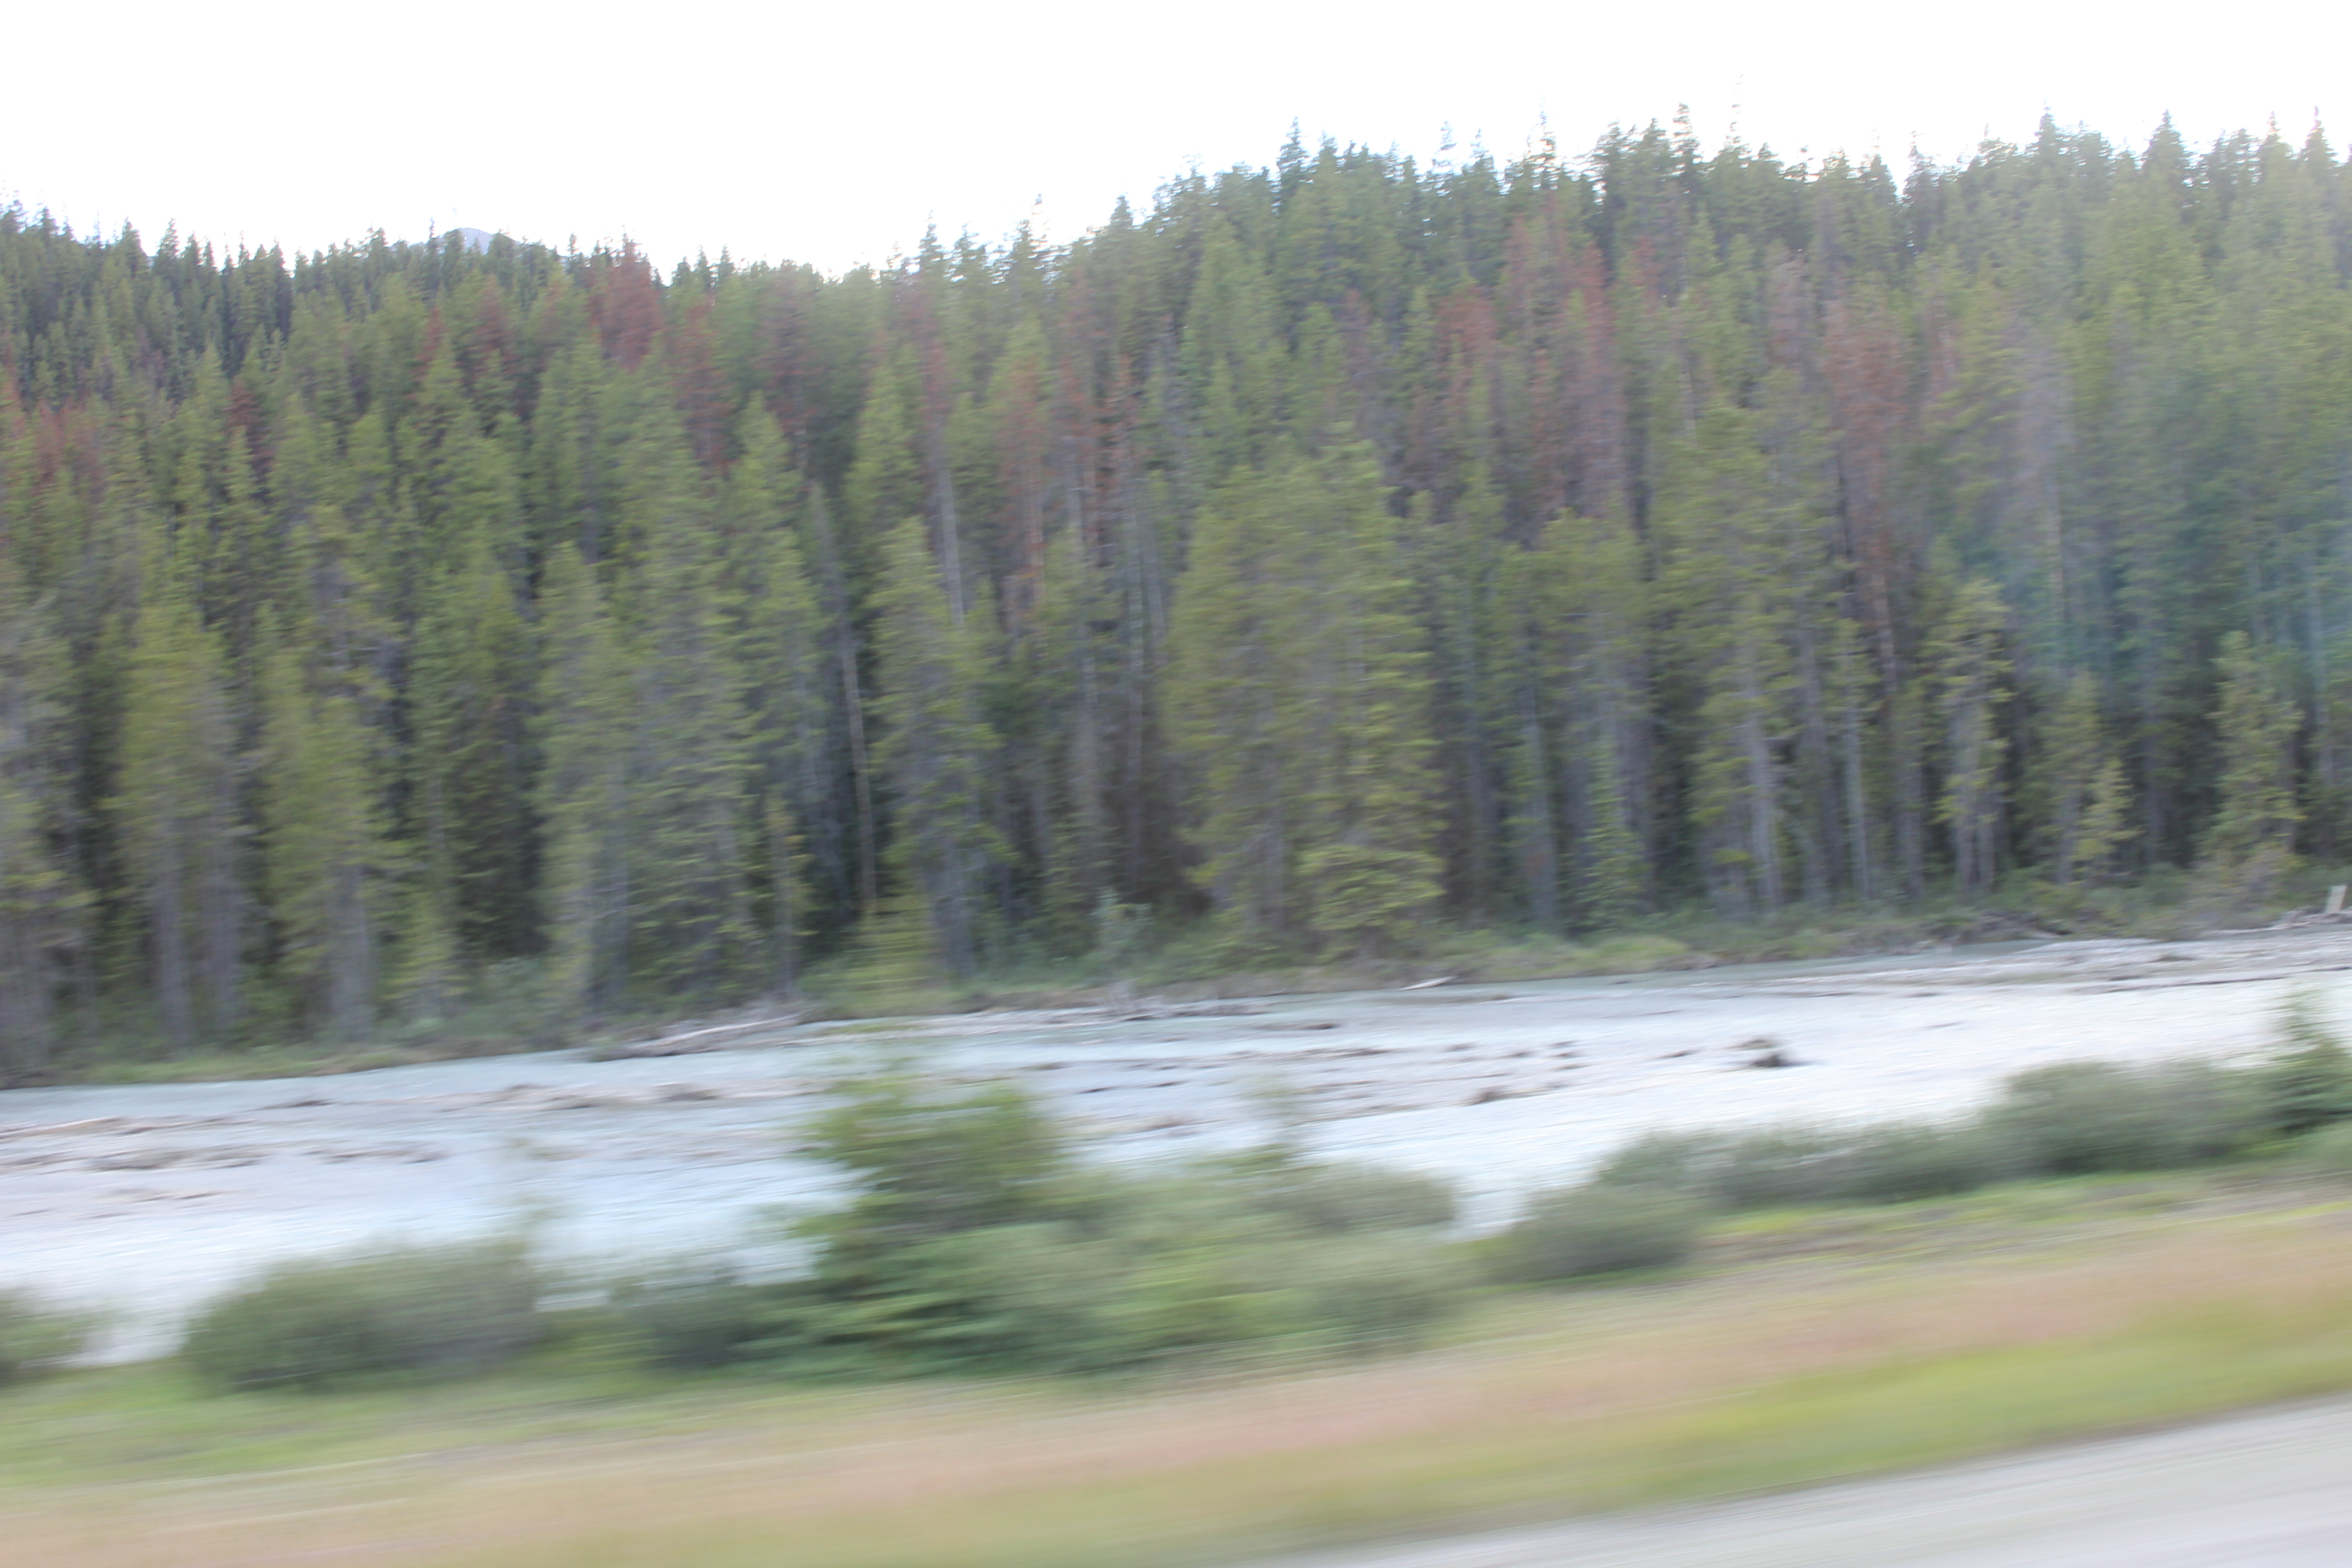 2011 July Break - British Columbia, Canada (Galena Bay Ferry, Revelstoke, Glacier National Park, Black Bears, Grizzly Bear, Mountain Goat)